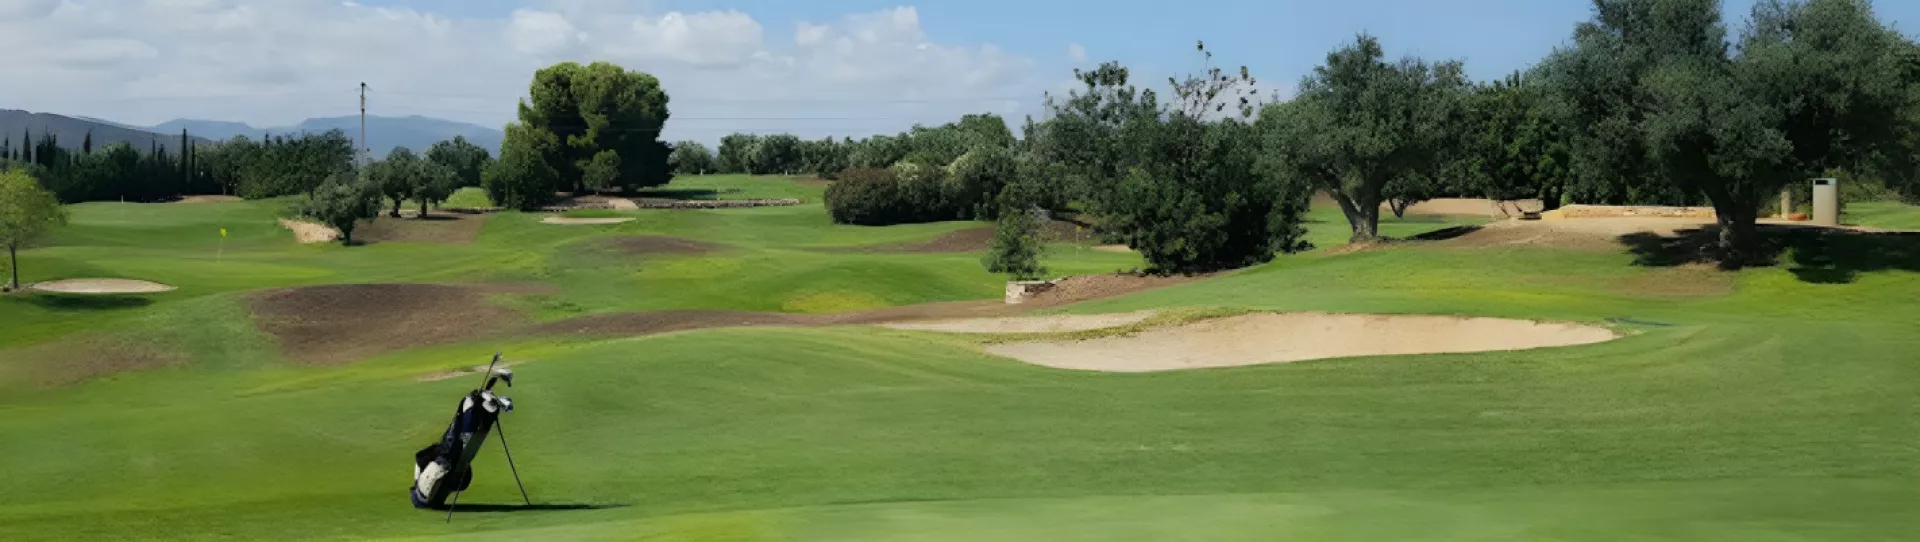 Spain golf courses - El Vendrell Golf Center - Photo 1